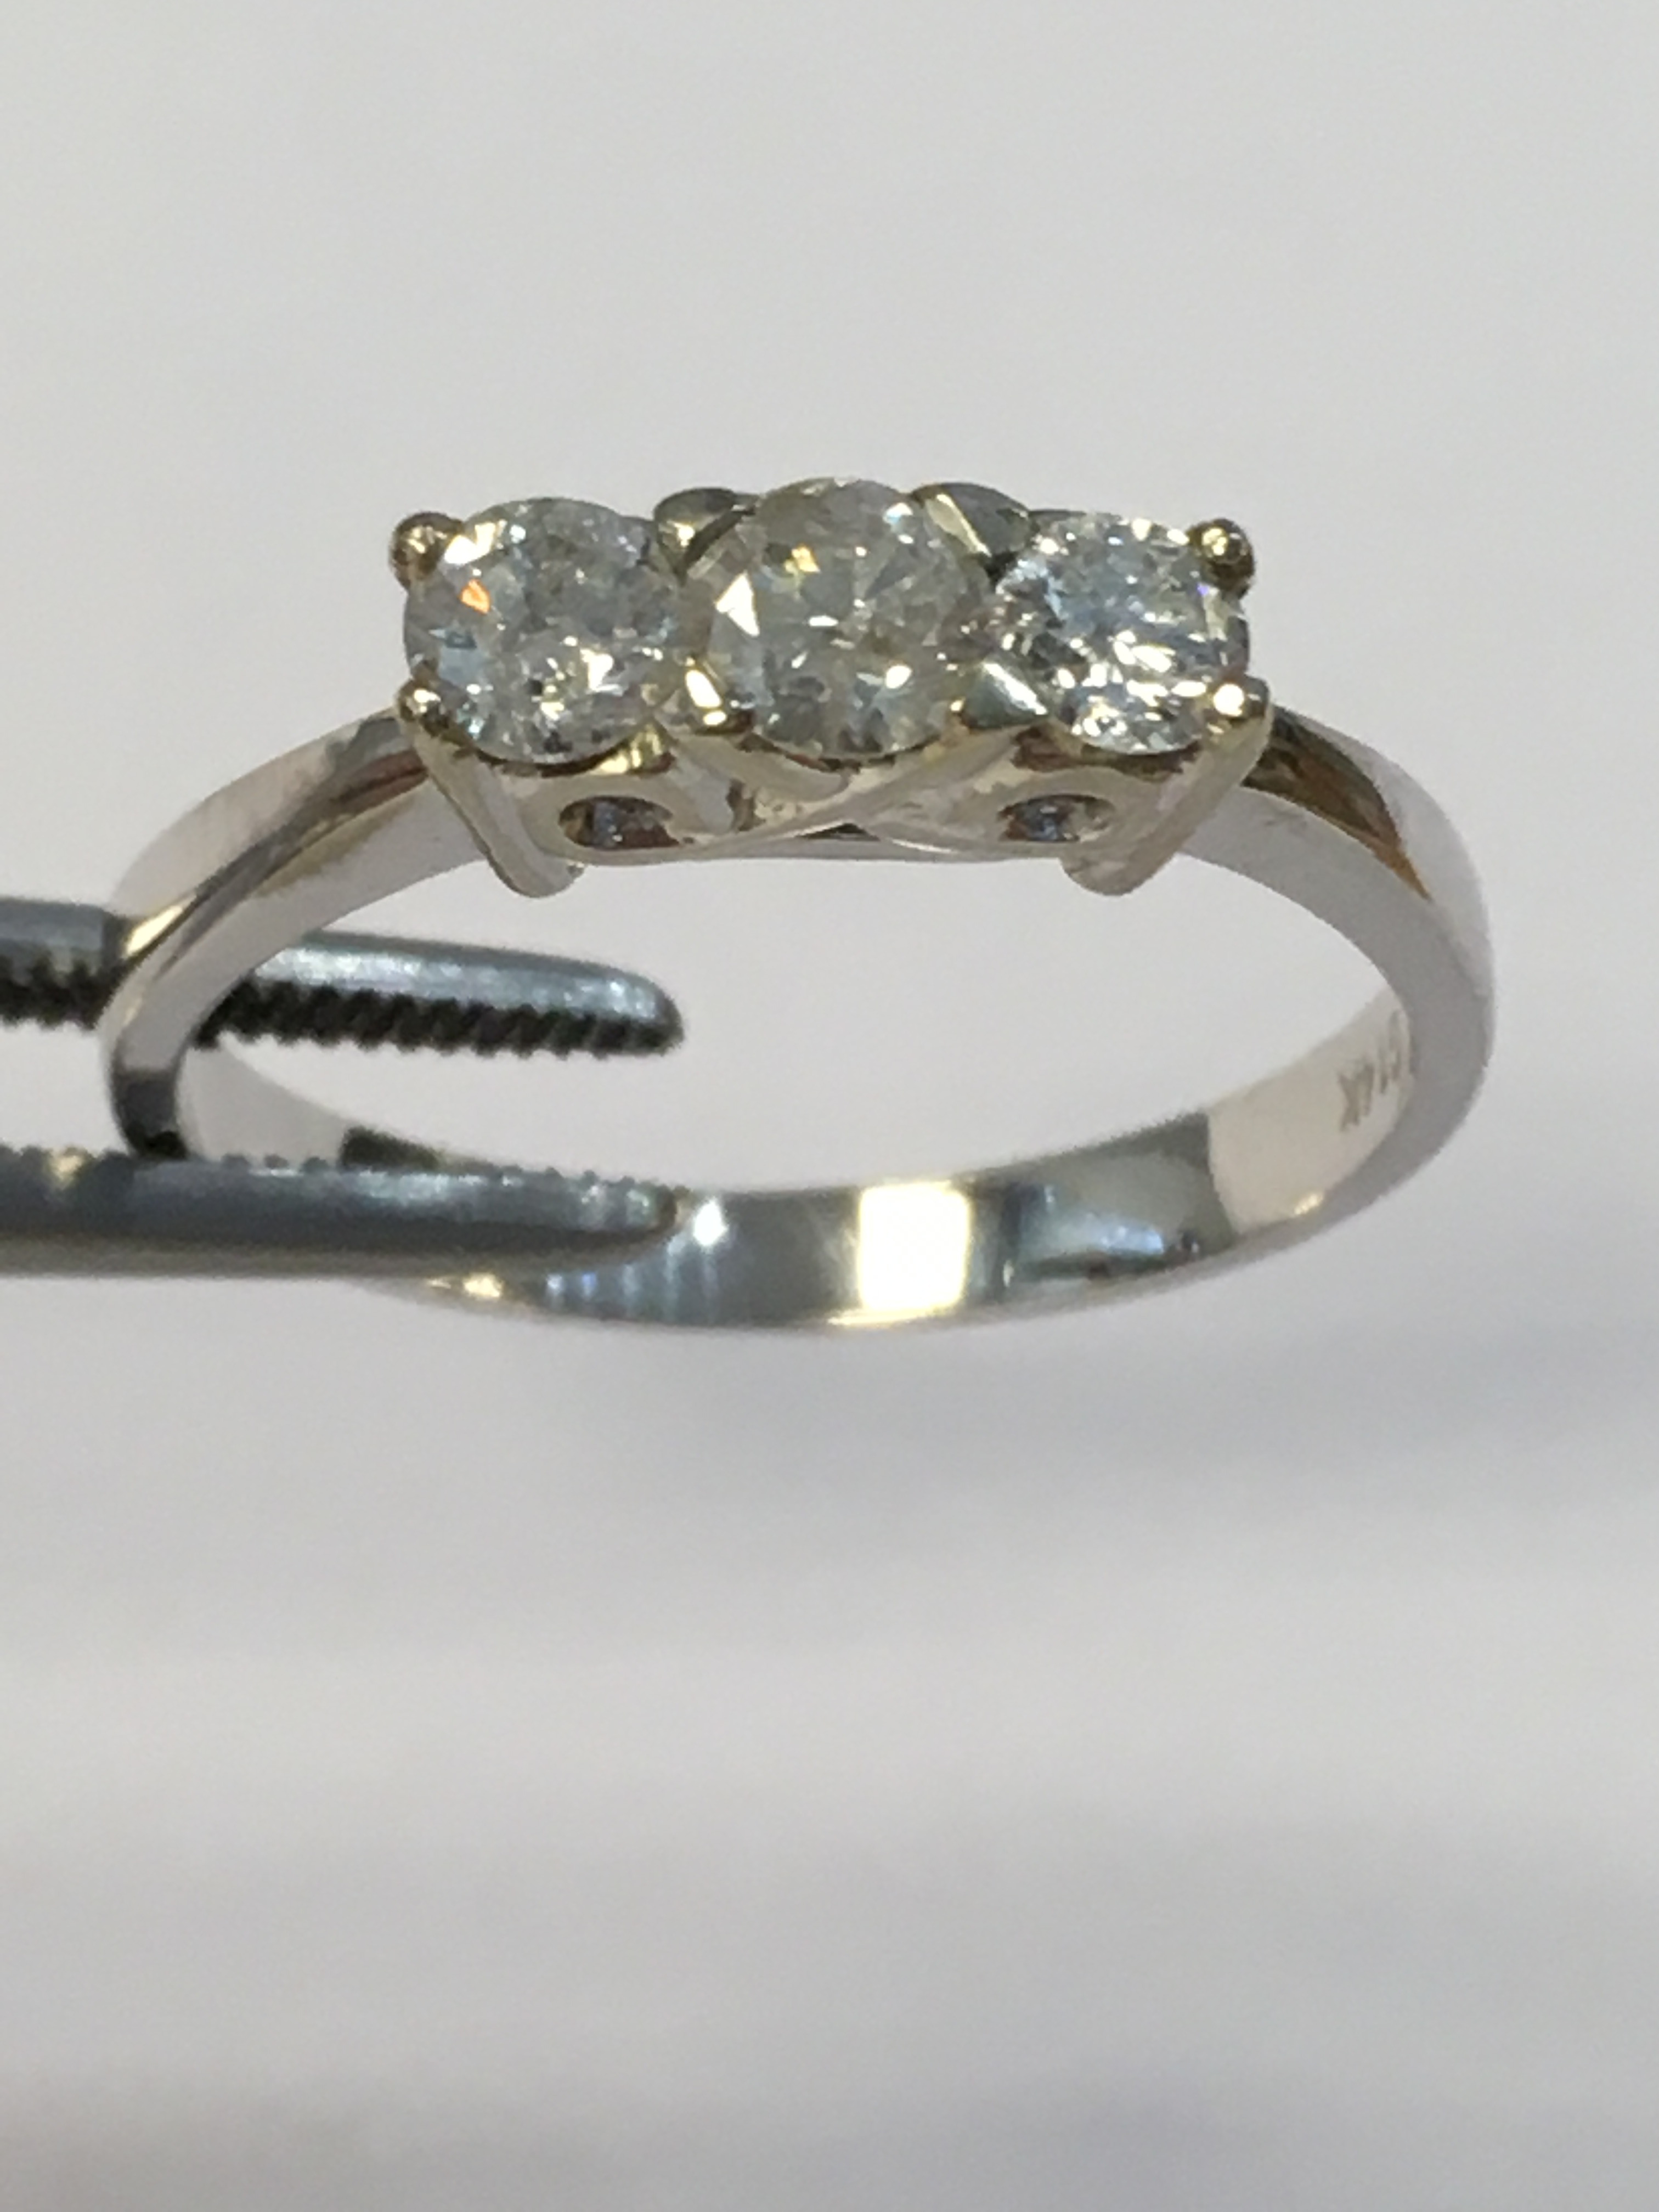 14K White Gold Engagement Ring with 3 set diamonds Hallmoarked - Image 2 of 3